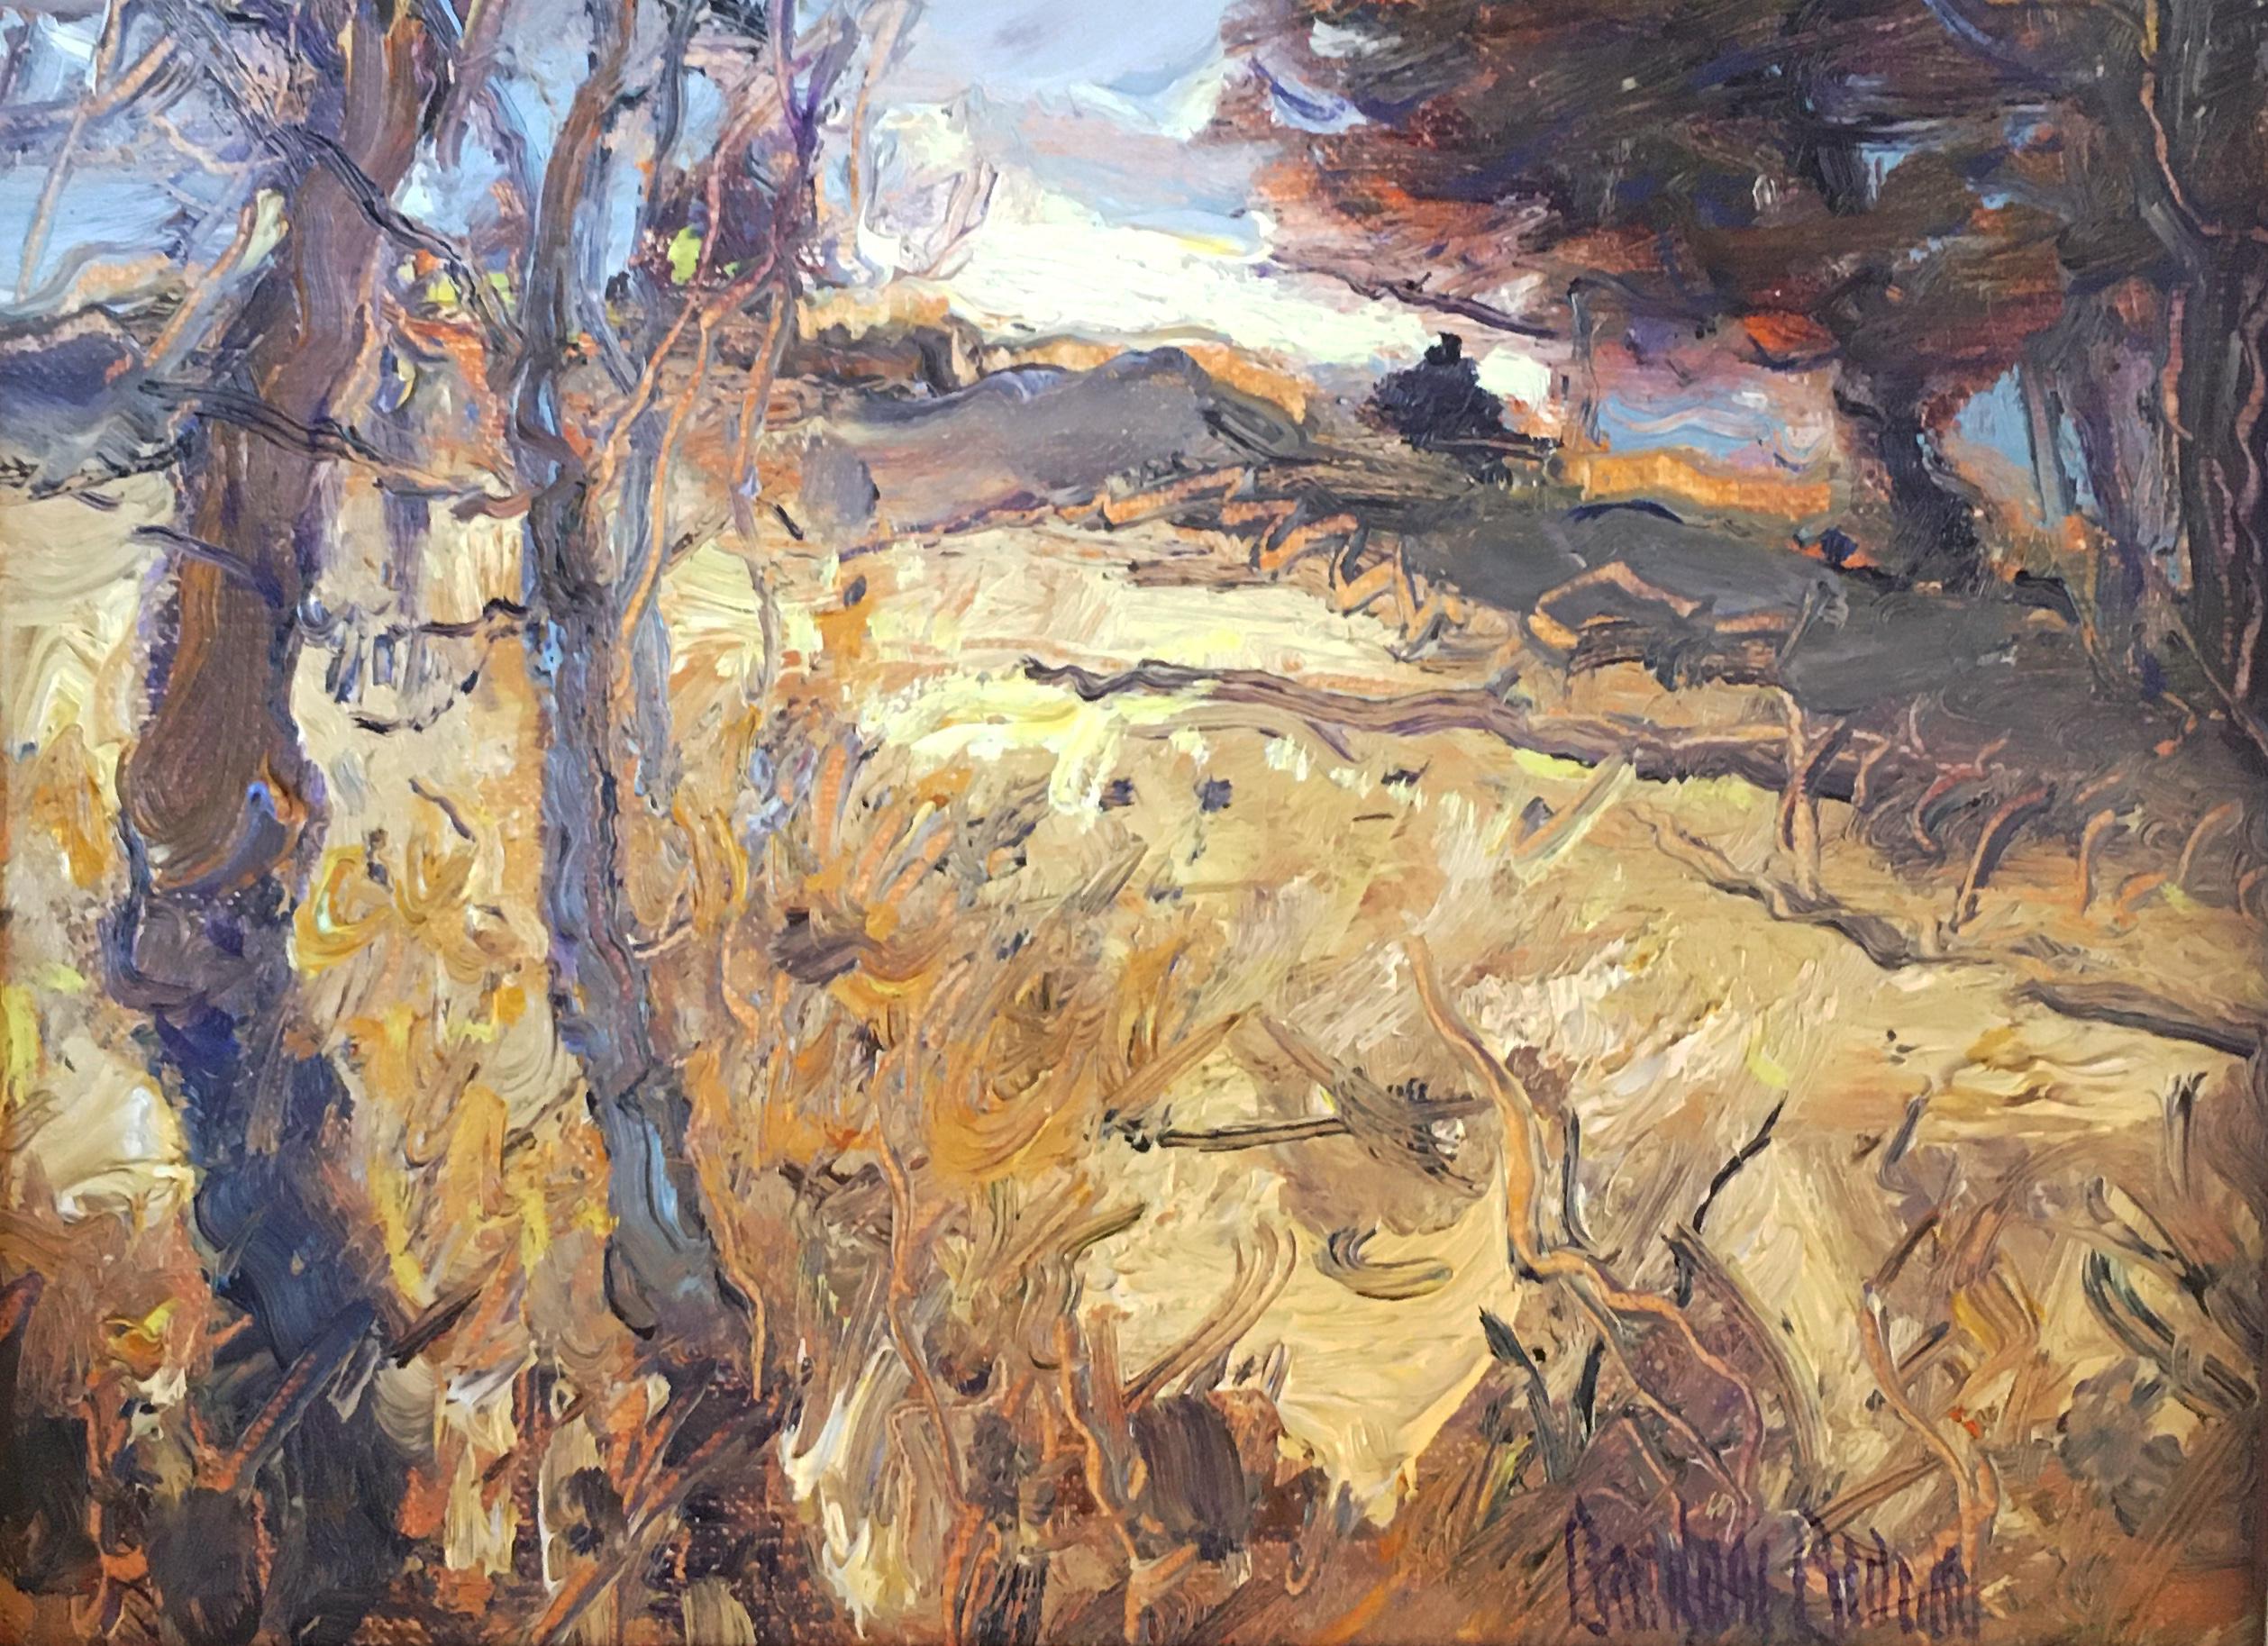 Gordon Brown Landscape Painting - "Autumn Field" Oil Painting